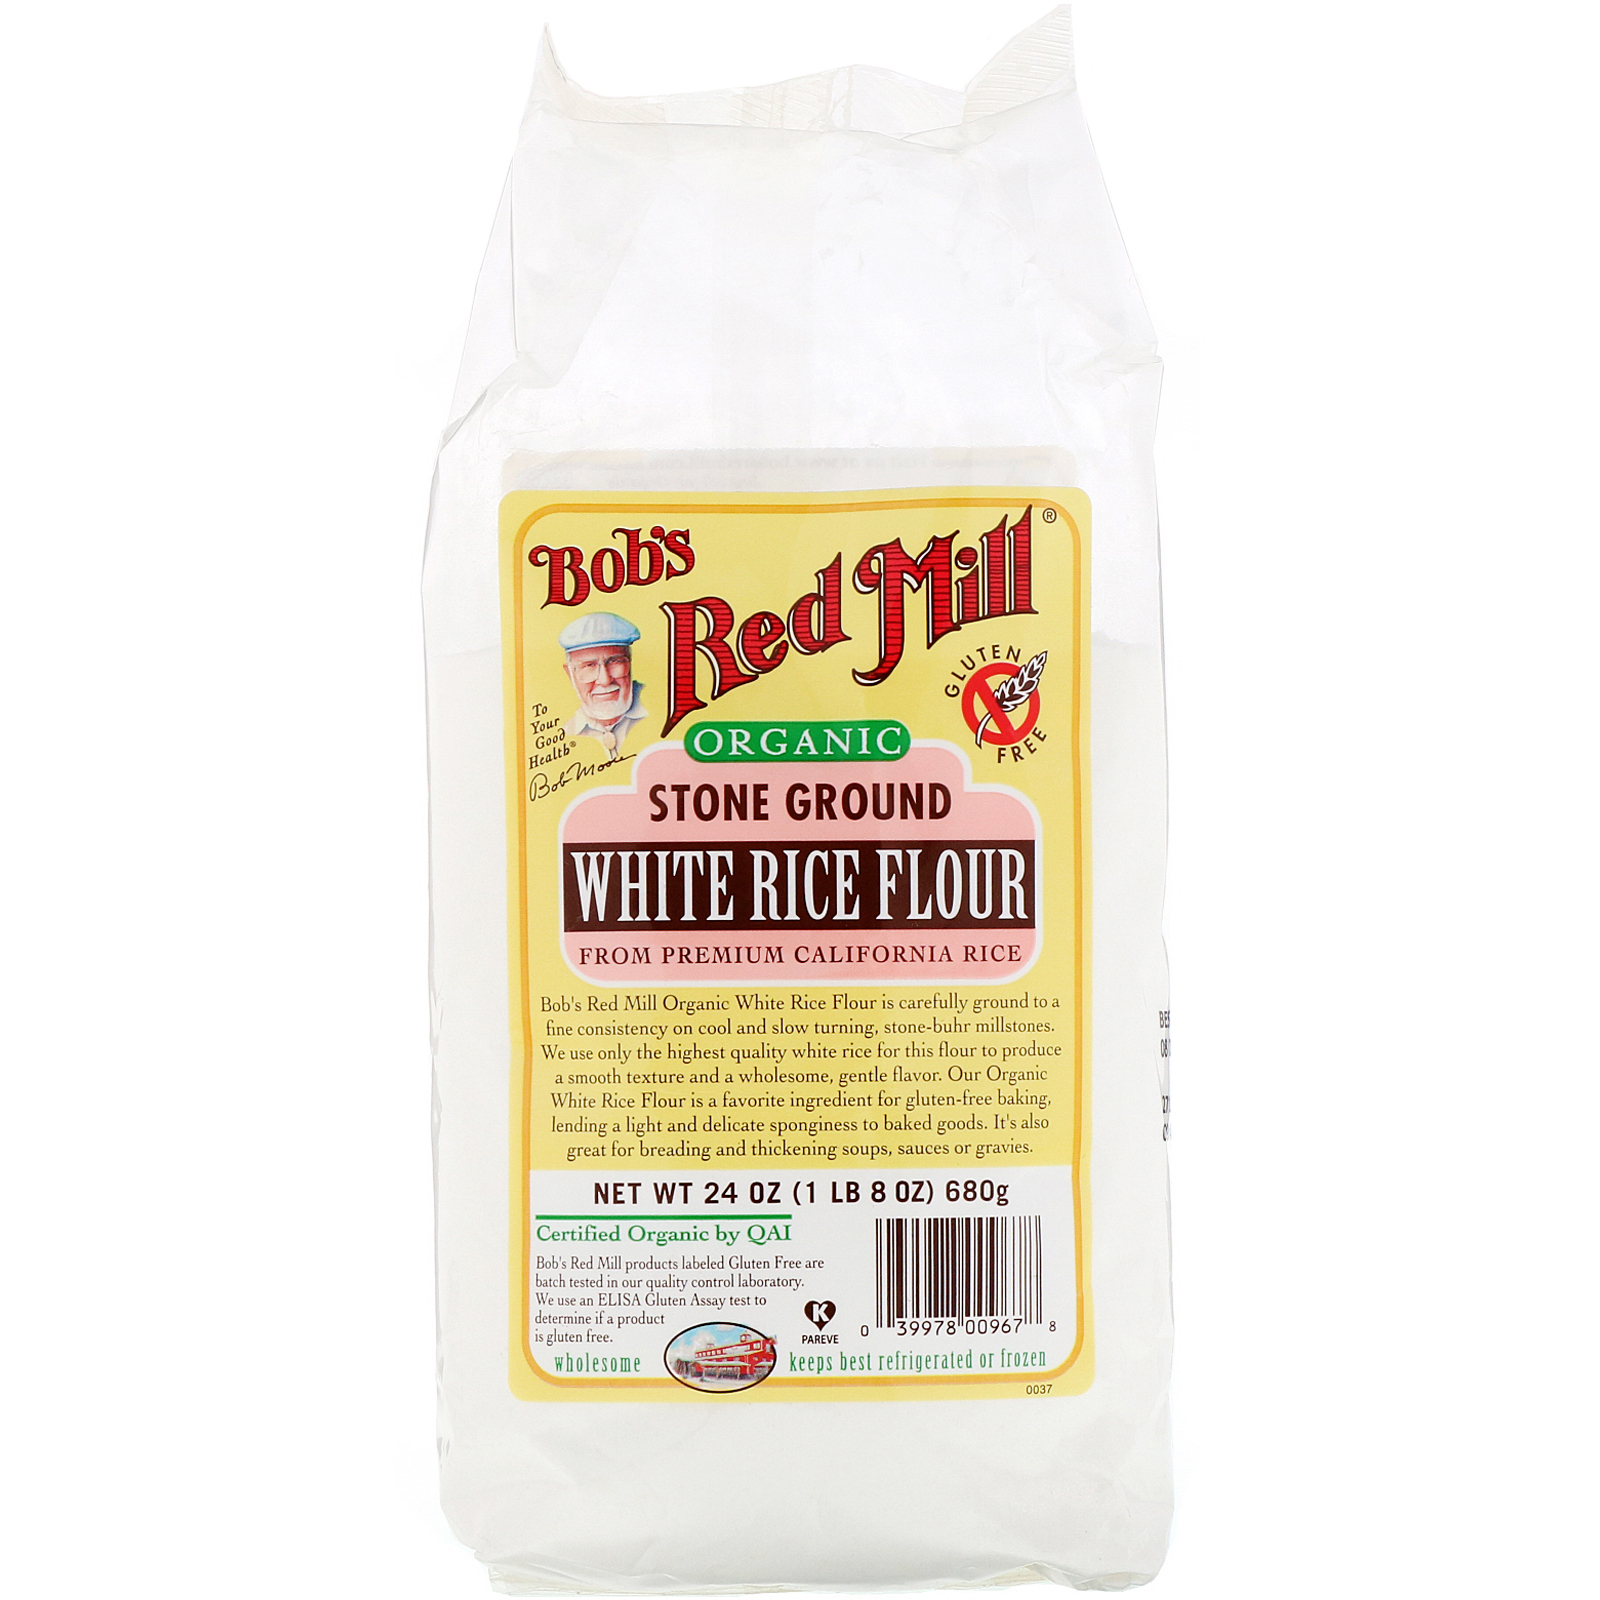 Мука и рис александров. Органическая мука. Органическая мука из белого риса. Rice flour Red Bob Mill.